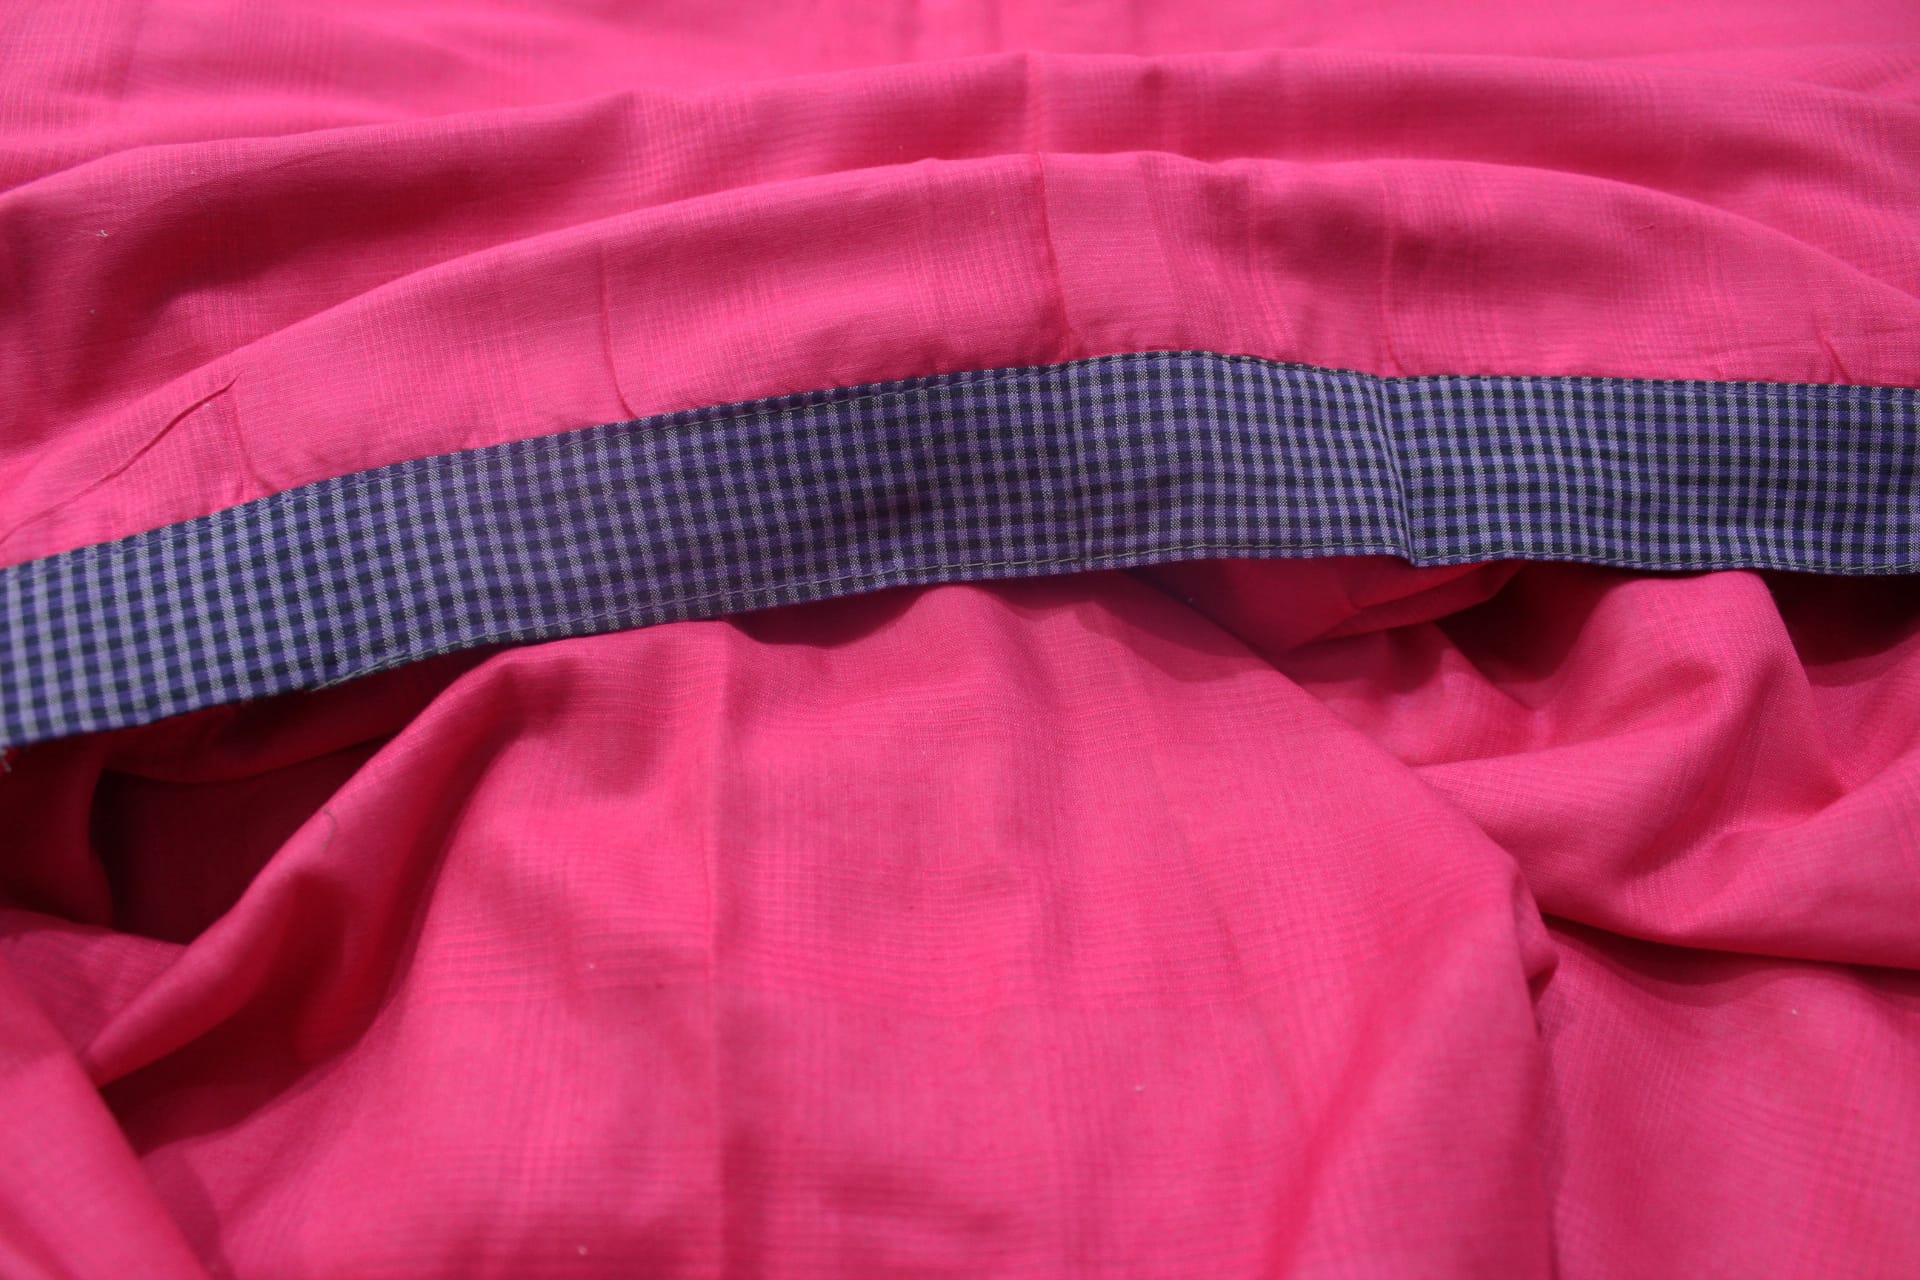 Cozy Plaino Designer Plain Reversible Cotton Dohar Online In Pink